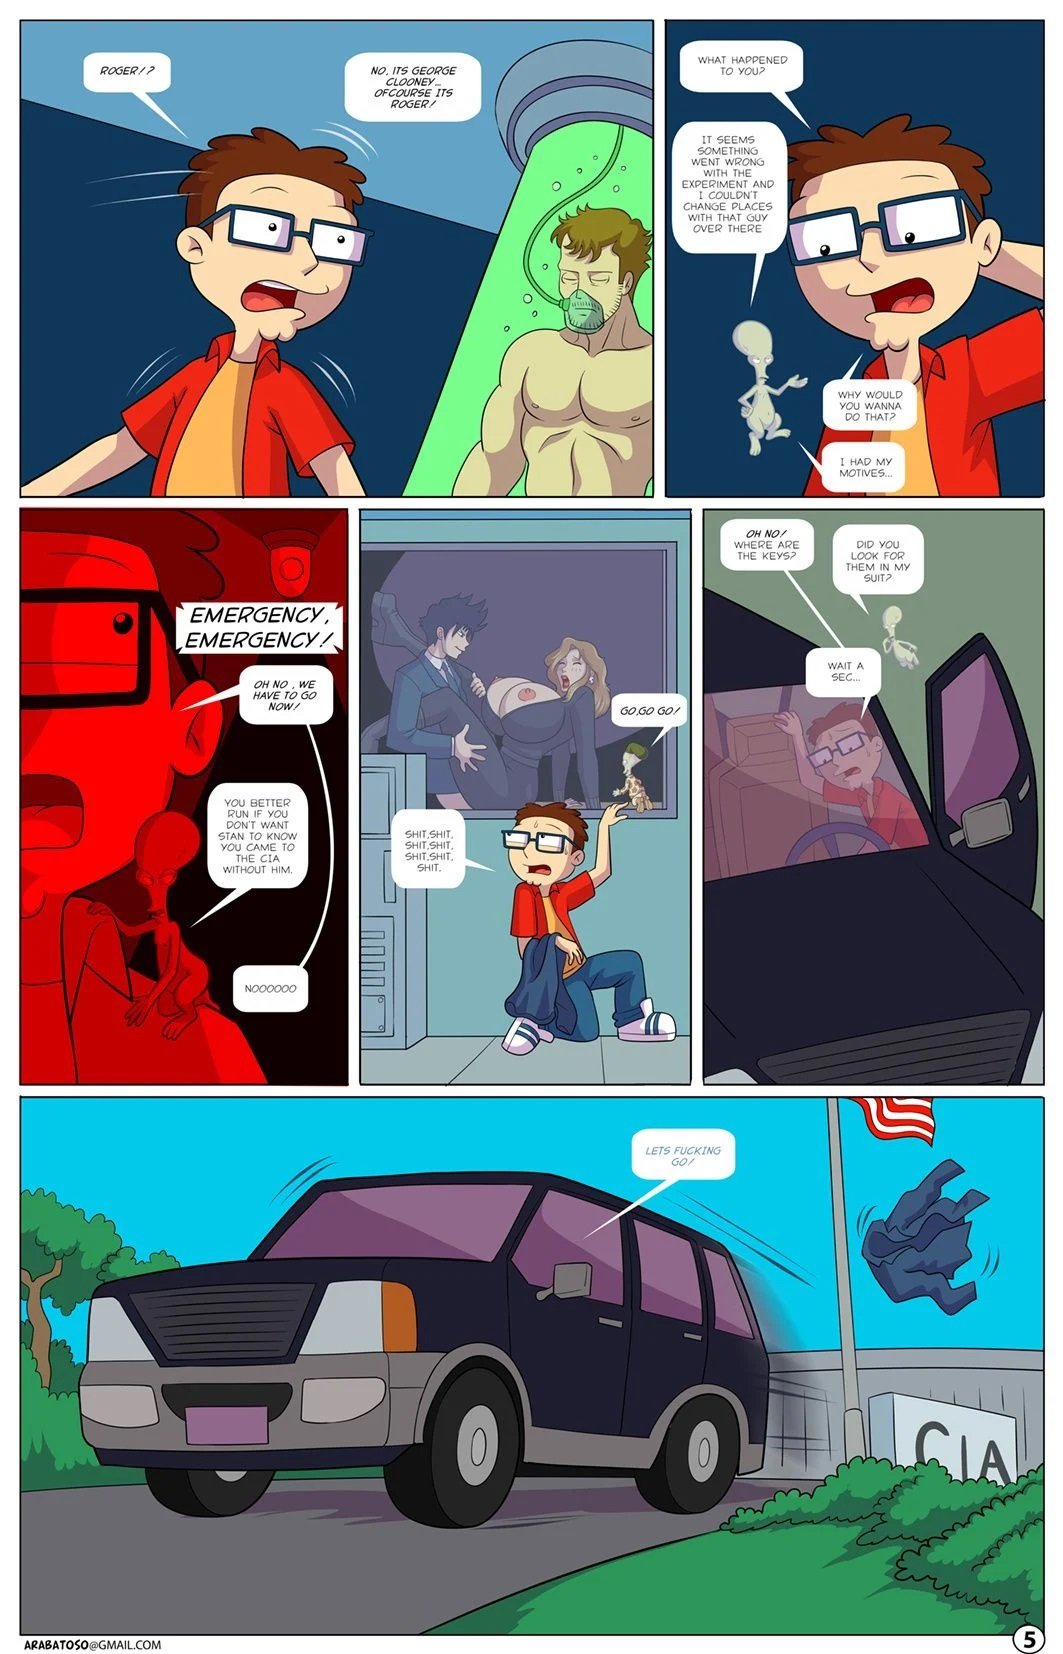 Arabatos â€“ The Tales of an American Son (American Dad) | Top Hentai Comics